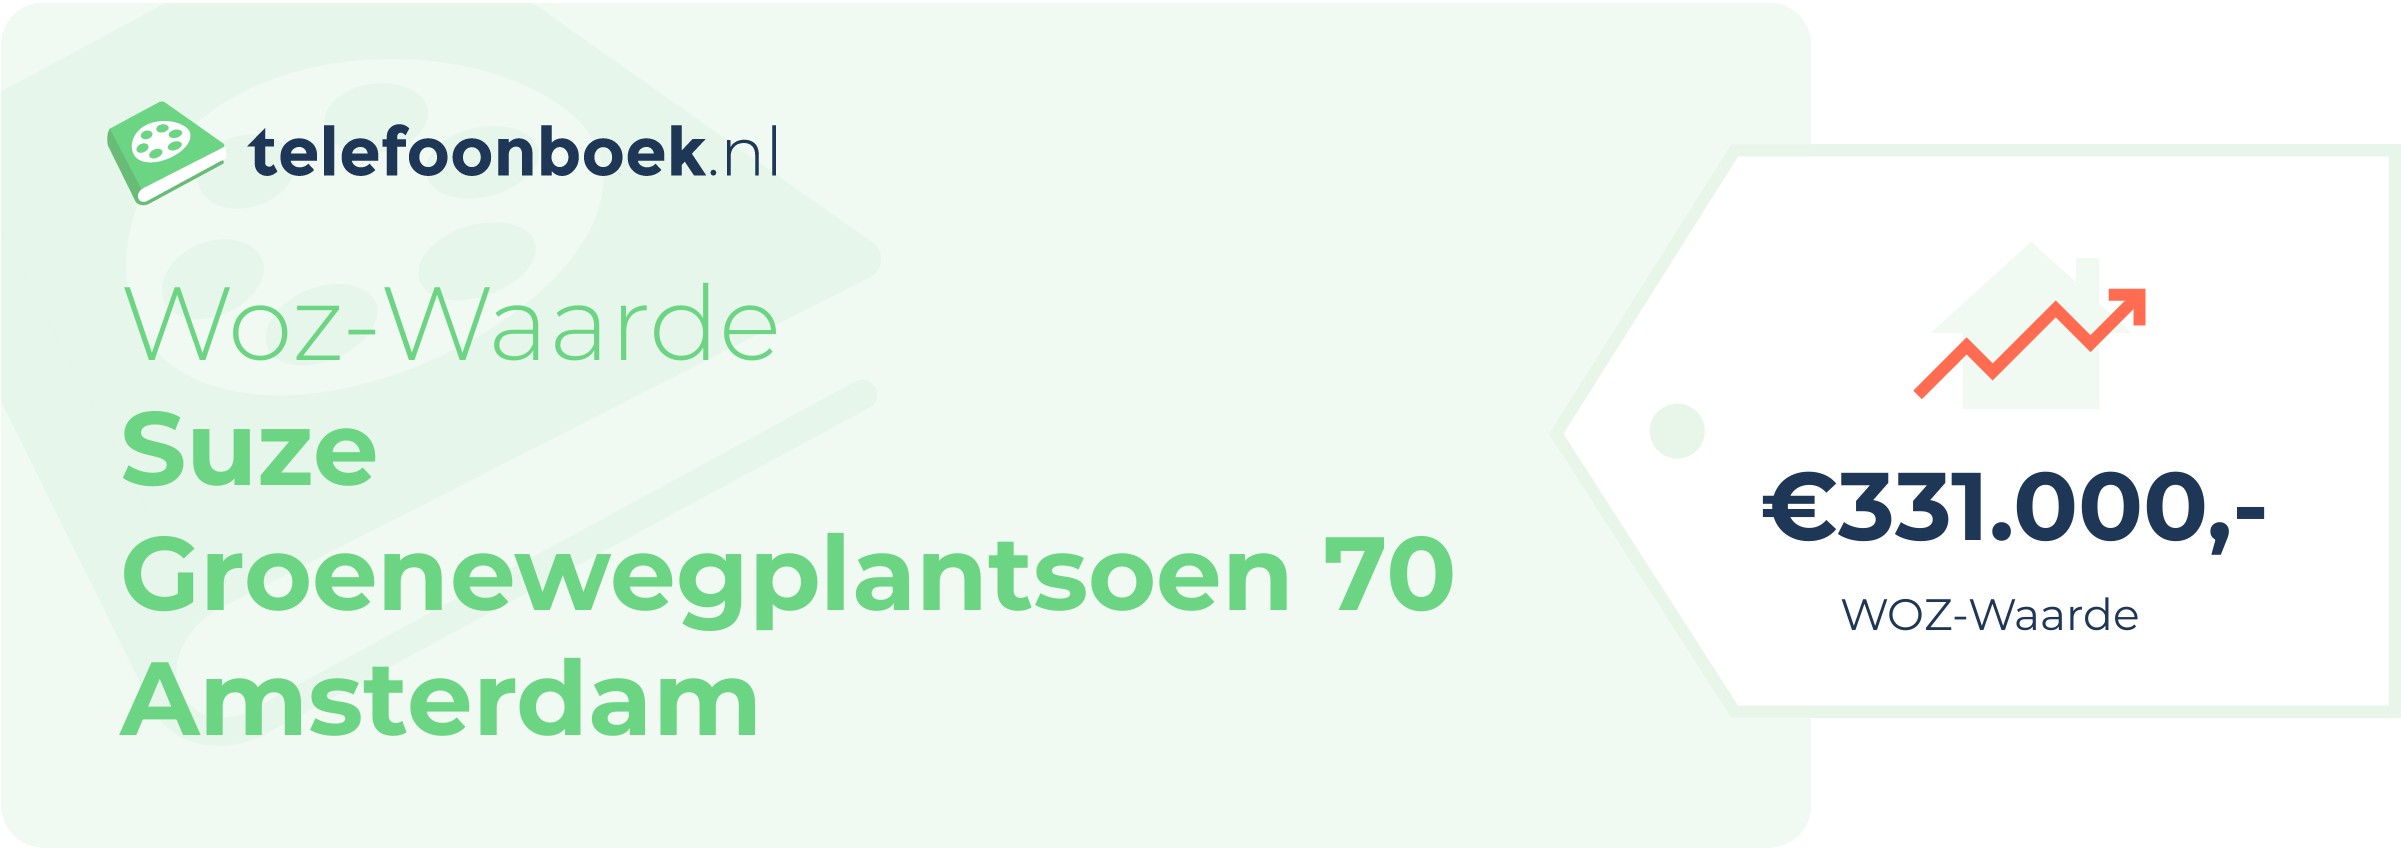 WOZ-waarde Suze Groenewegplantsoen 70 Amsterdam